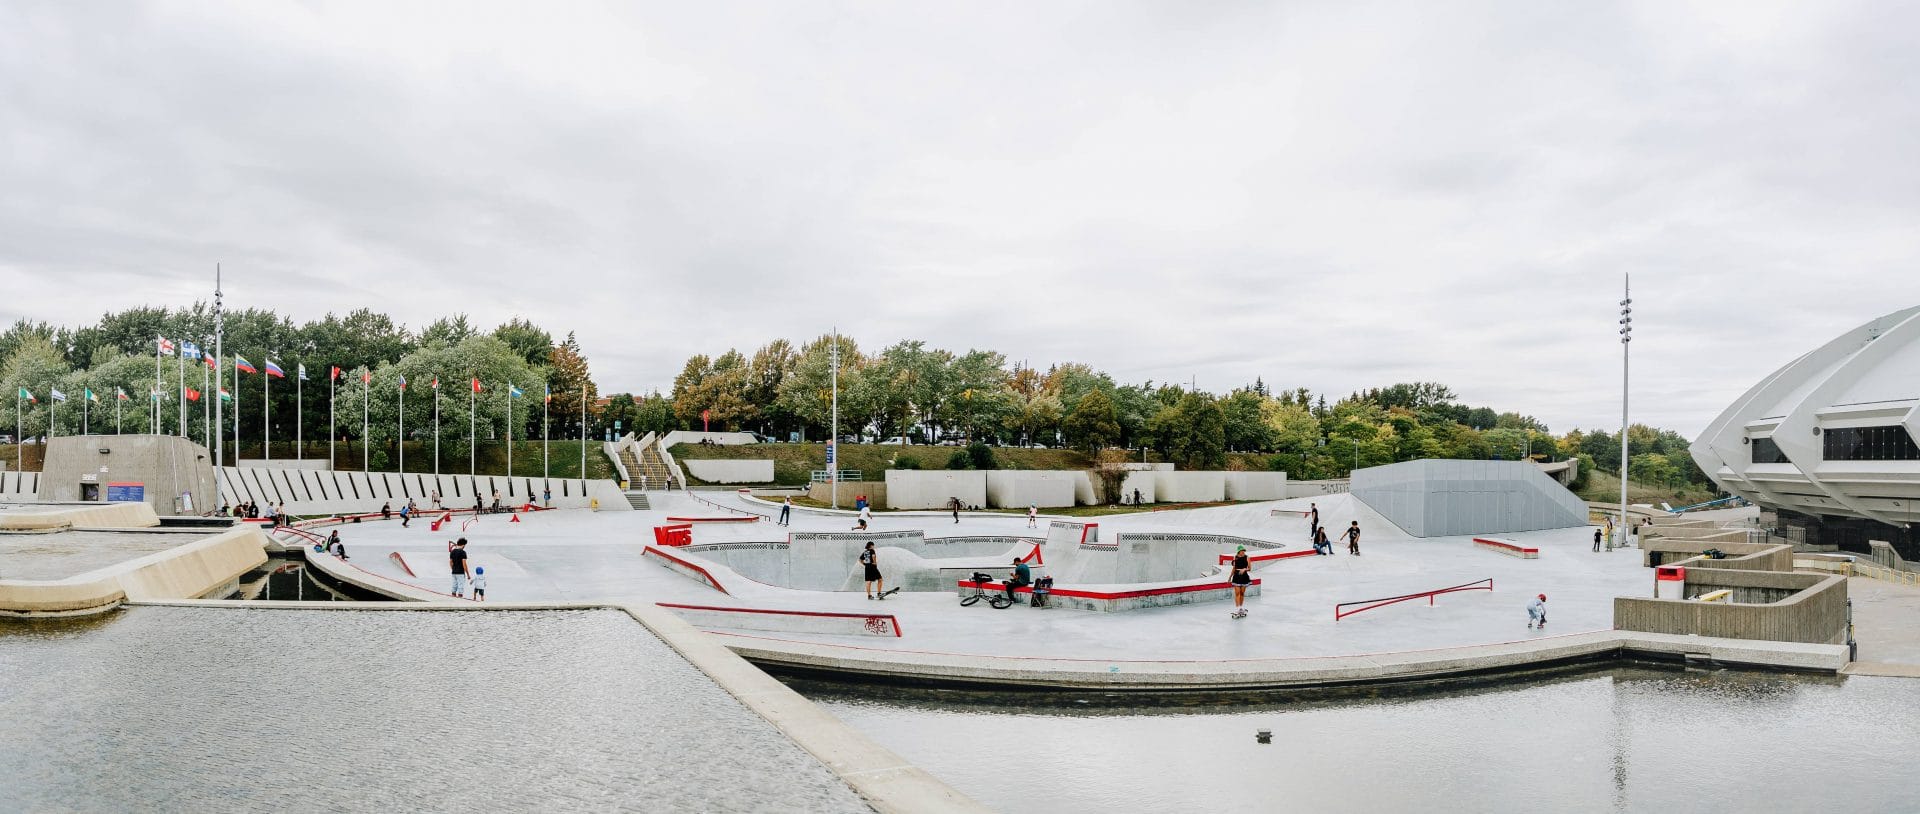 Skatepark Olympique_Lemay_Architecture_Design_Montreal_vue ensemble